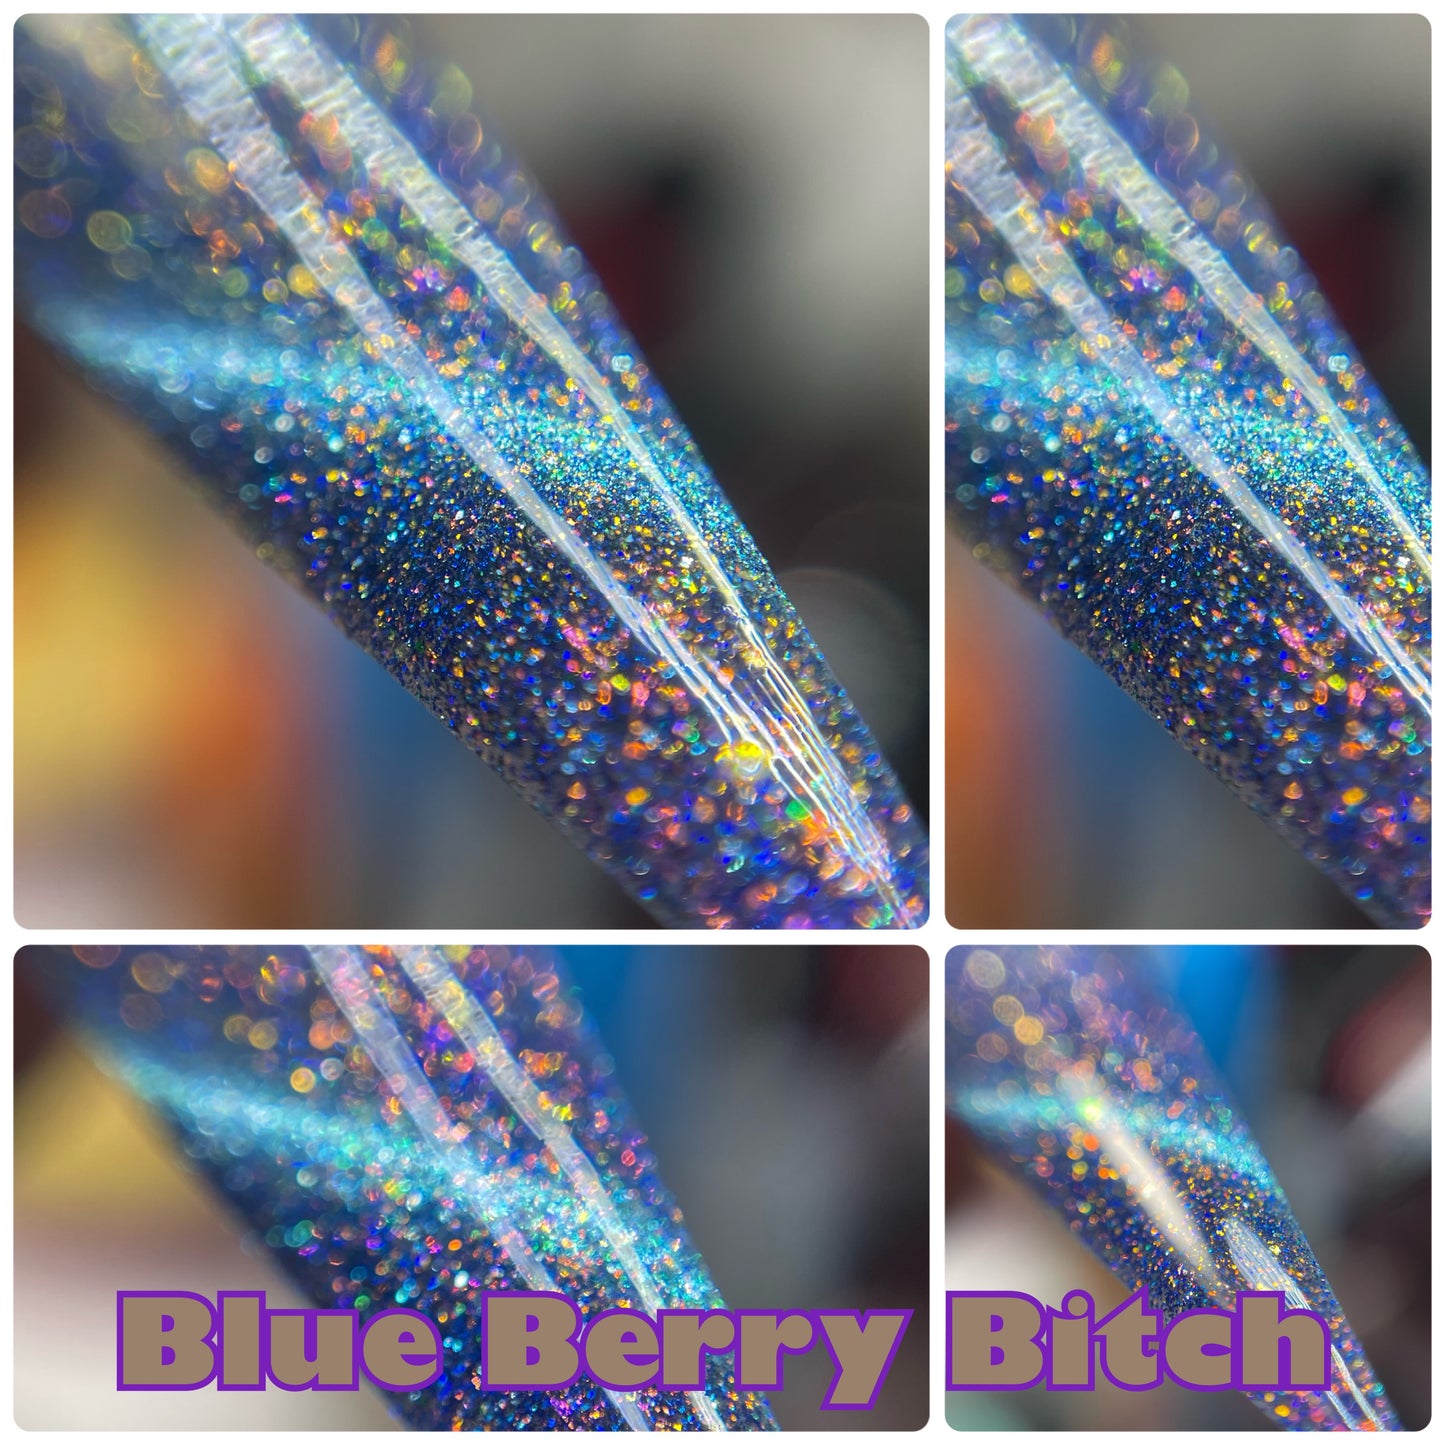 Blue Berry Bitch